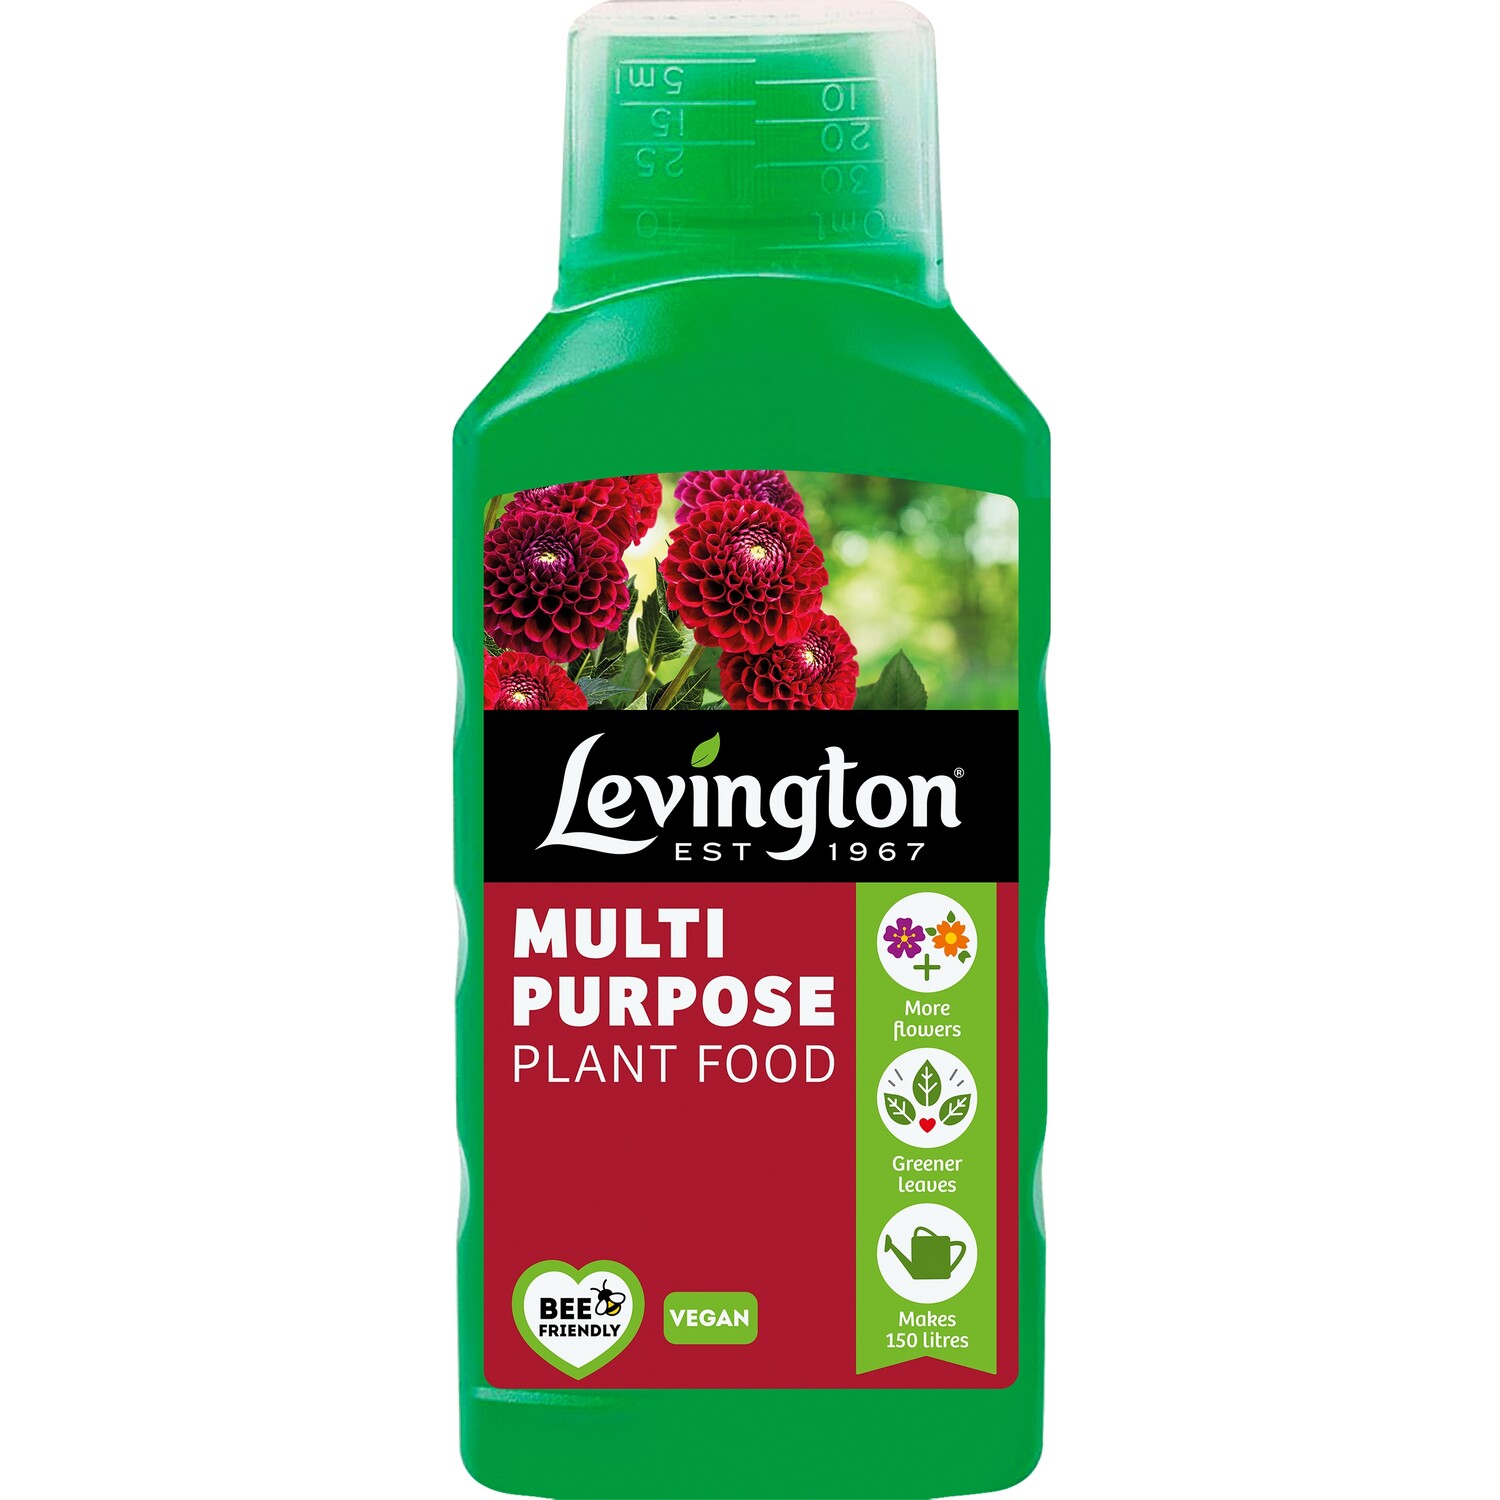 Levington All Purpose Plant Food Image 1